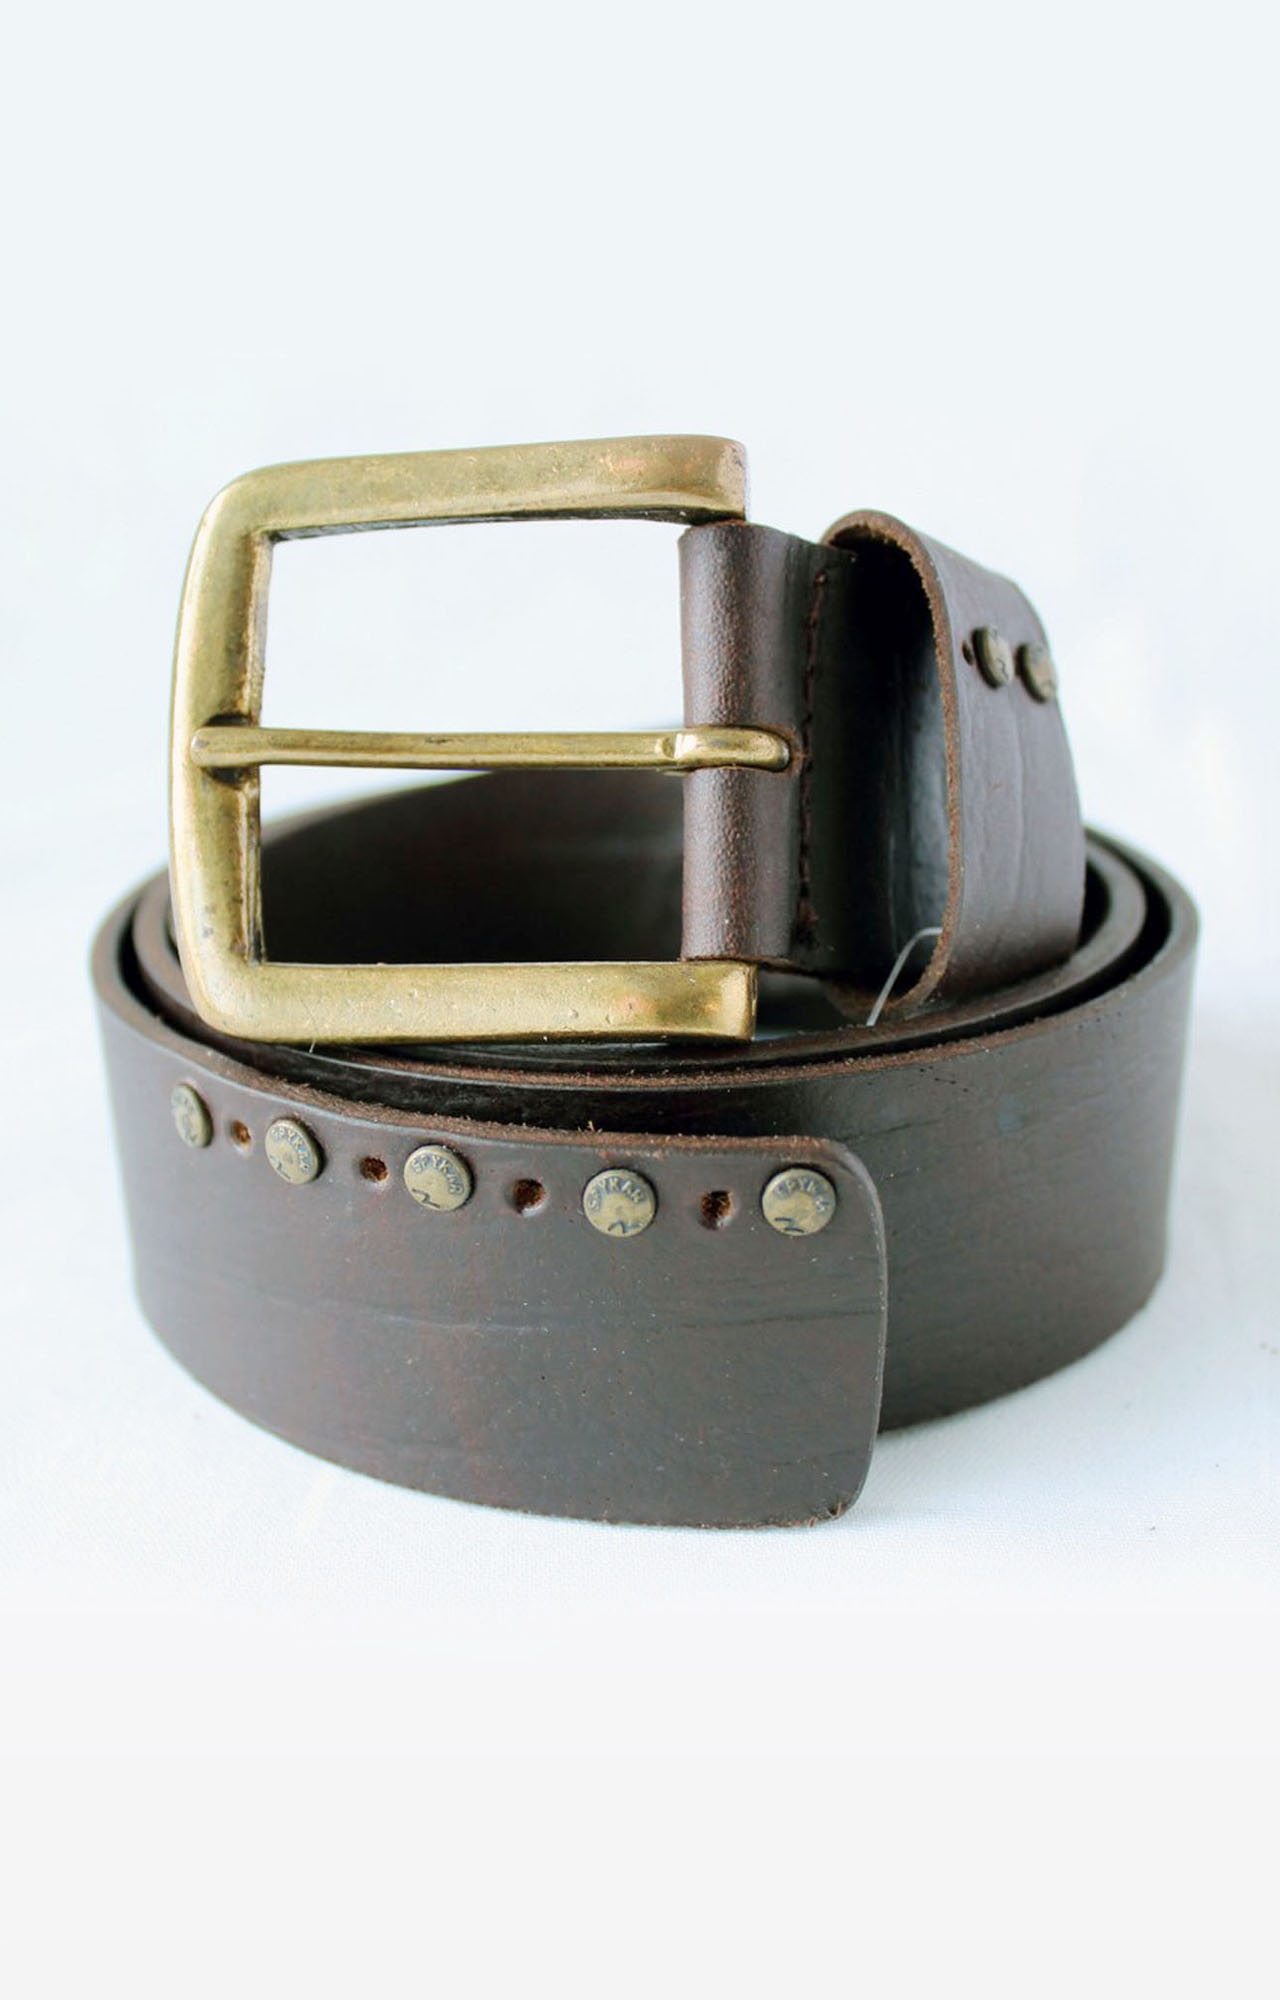 spykar | Spykar Brown Leather Belt 0